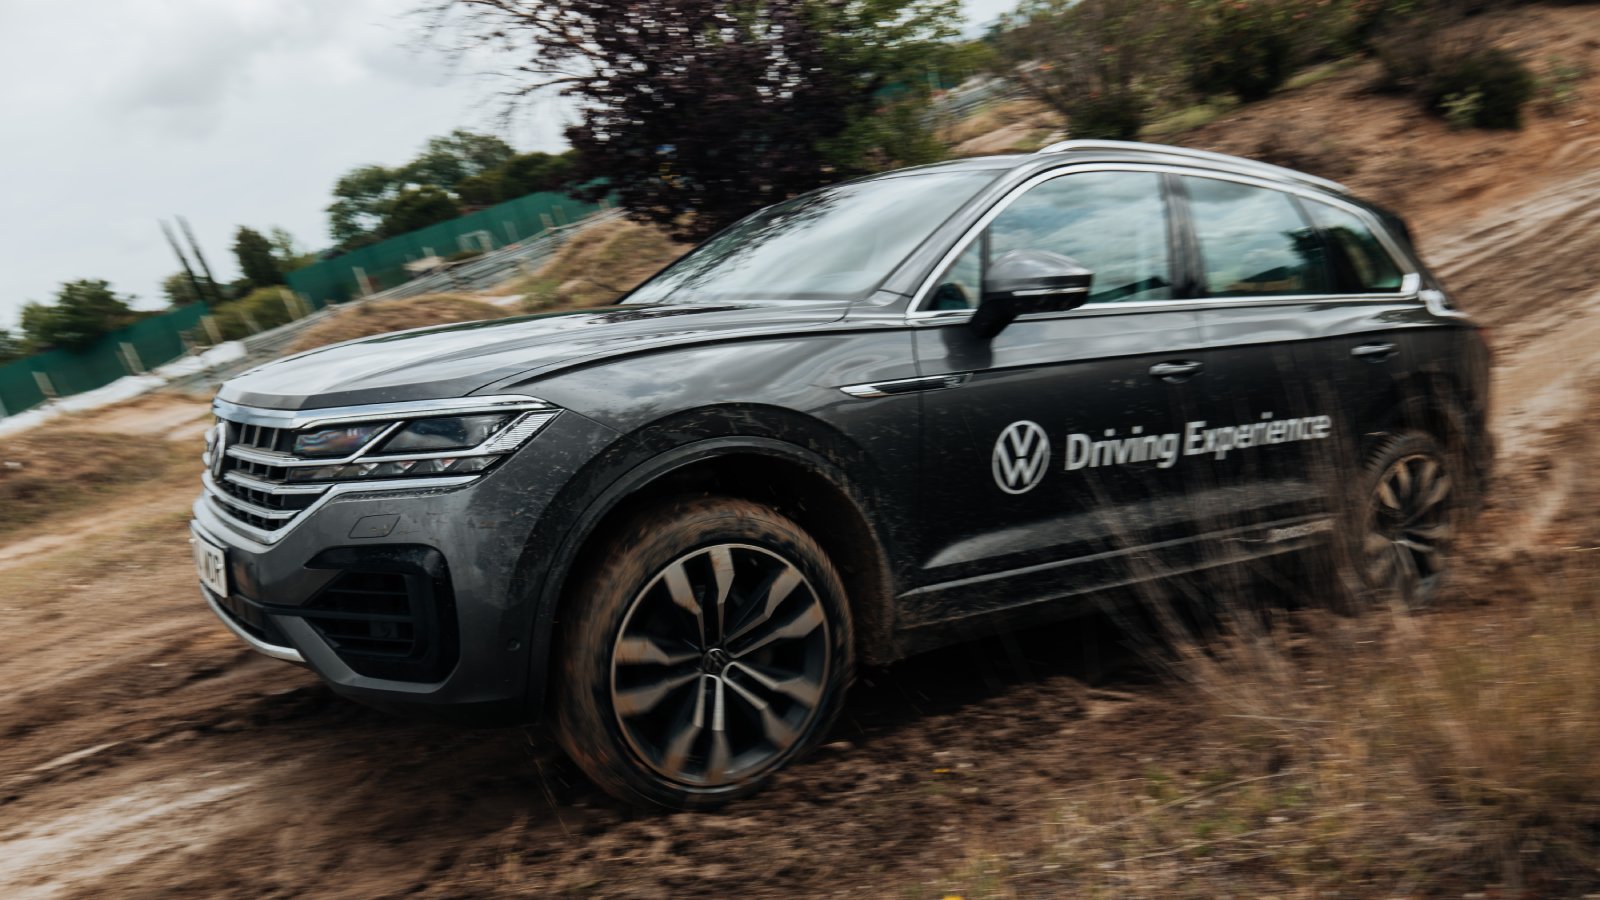 Volkswagen Driving Experiencie - SoyMotor.com